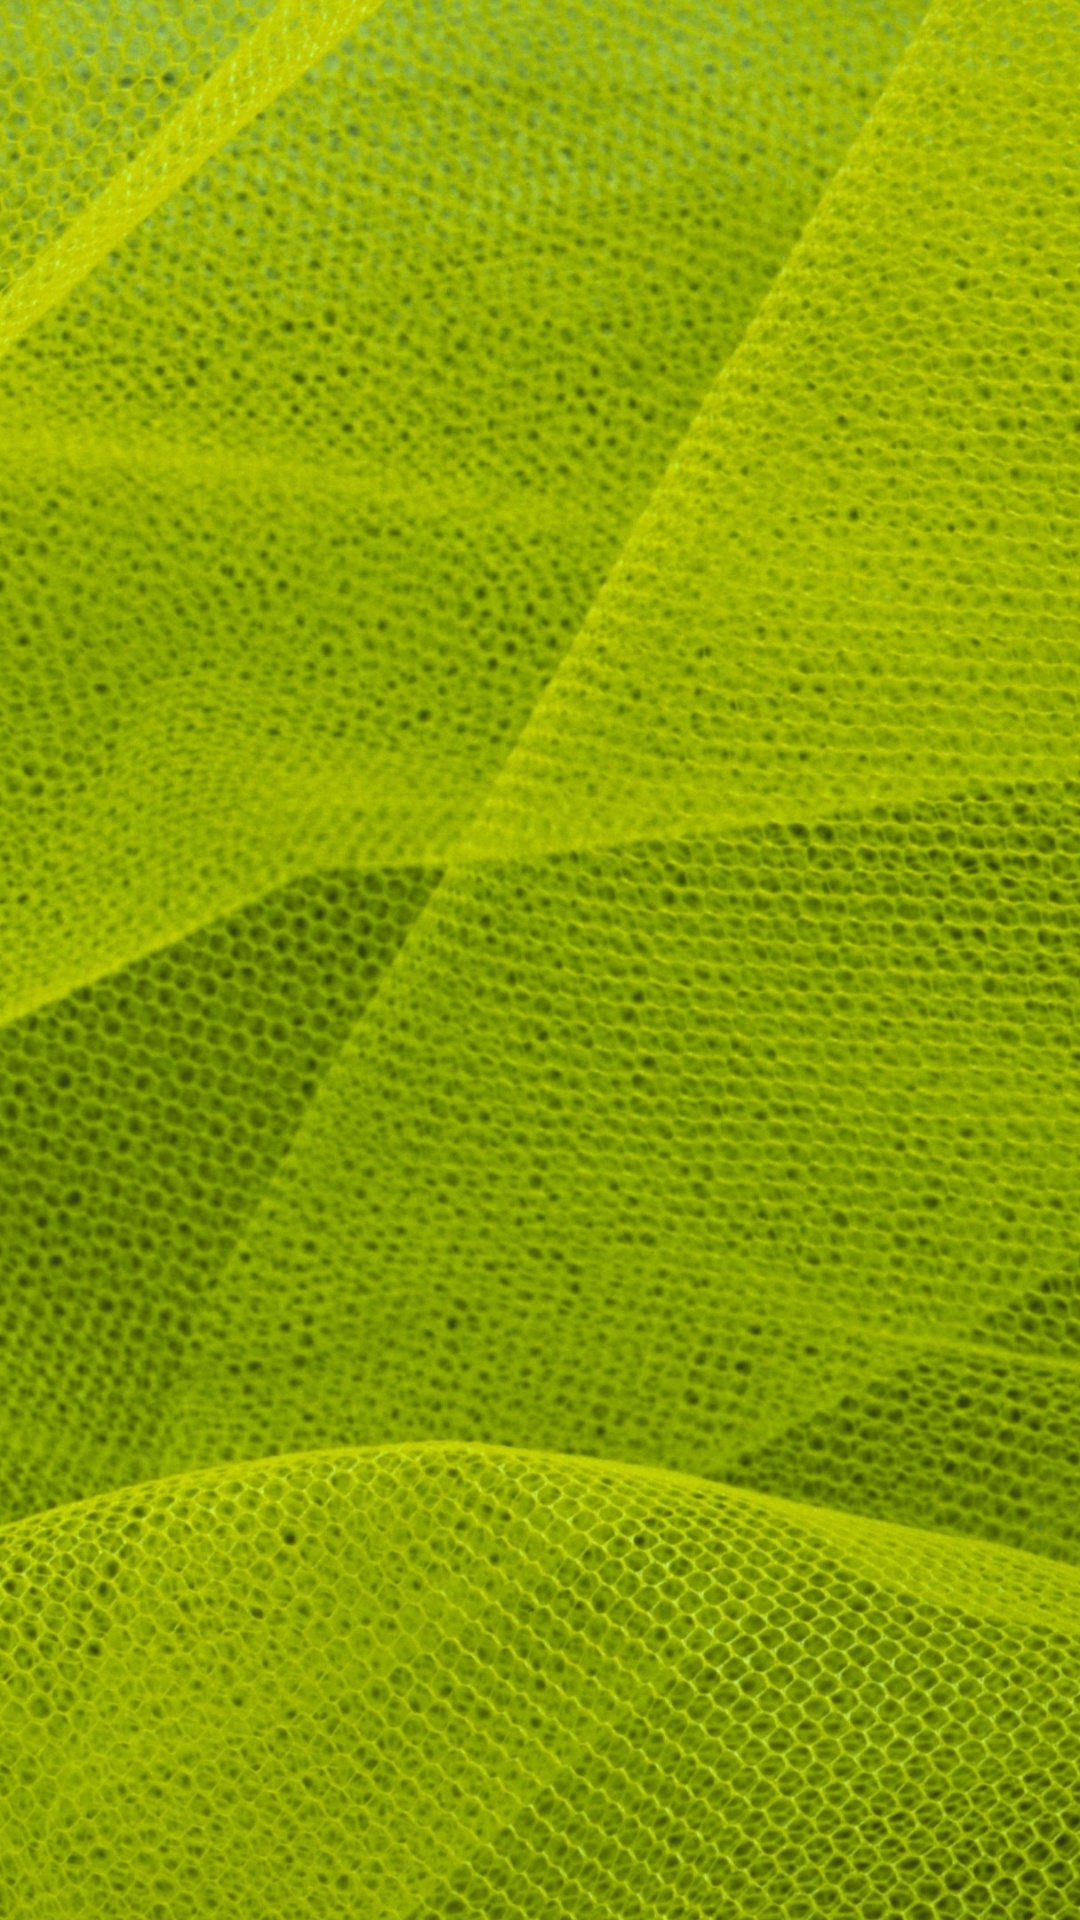 Textil Floral Verde y Blanco. Wallpaper in 1080x1920 Resolution